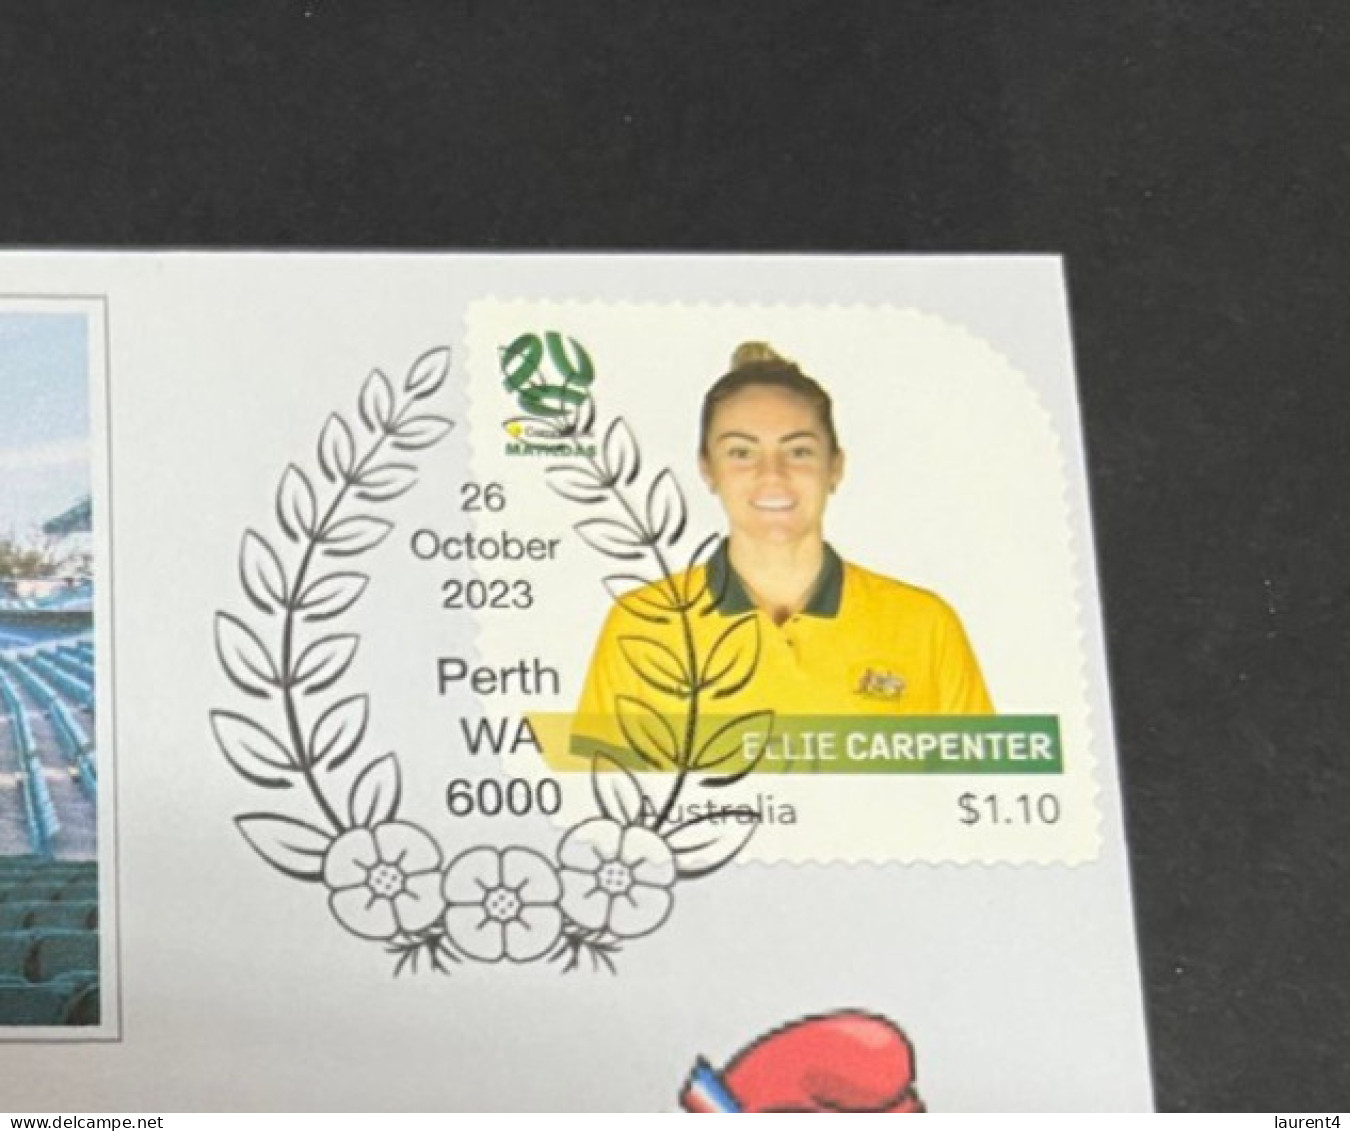 27-10-2023 (5 U 27) Australia (2) V Iran (0) - Matildas Olympic 2024 Qualifiers (match 1) 26-10-2023 In Perth - Summer 2024: Paris